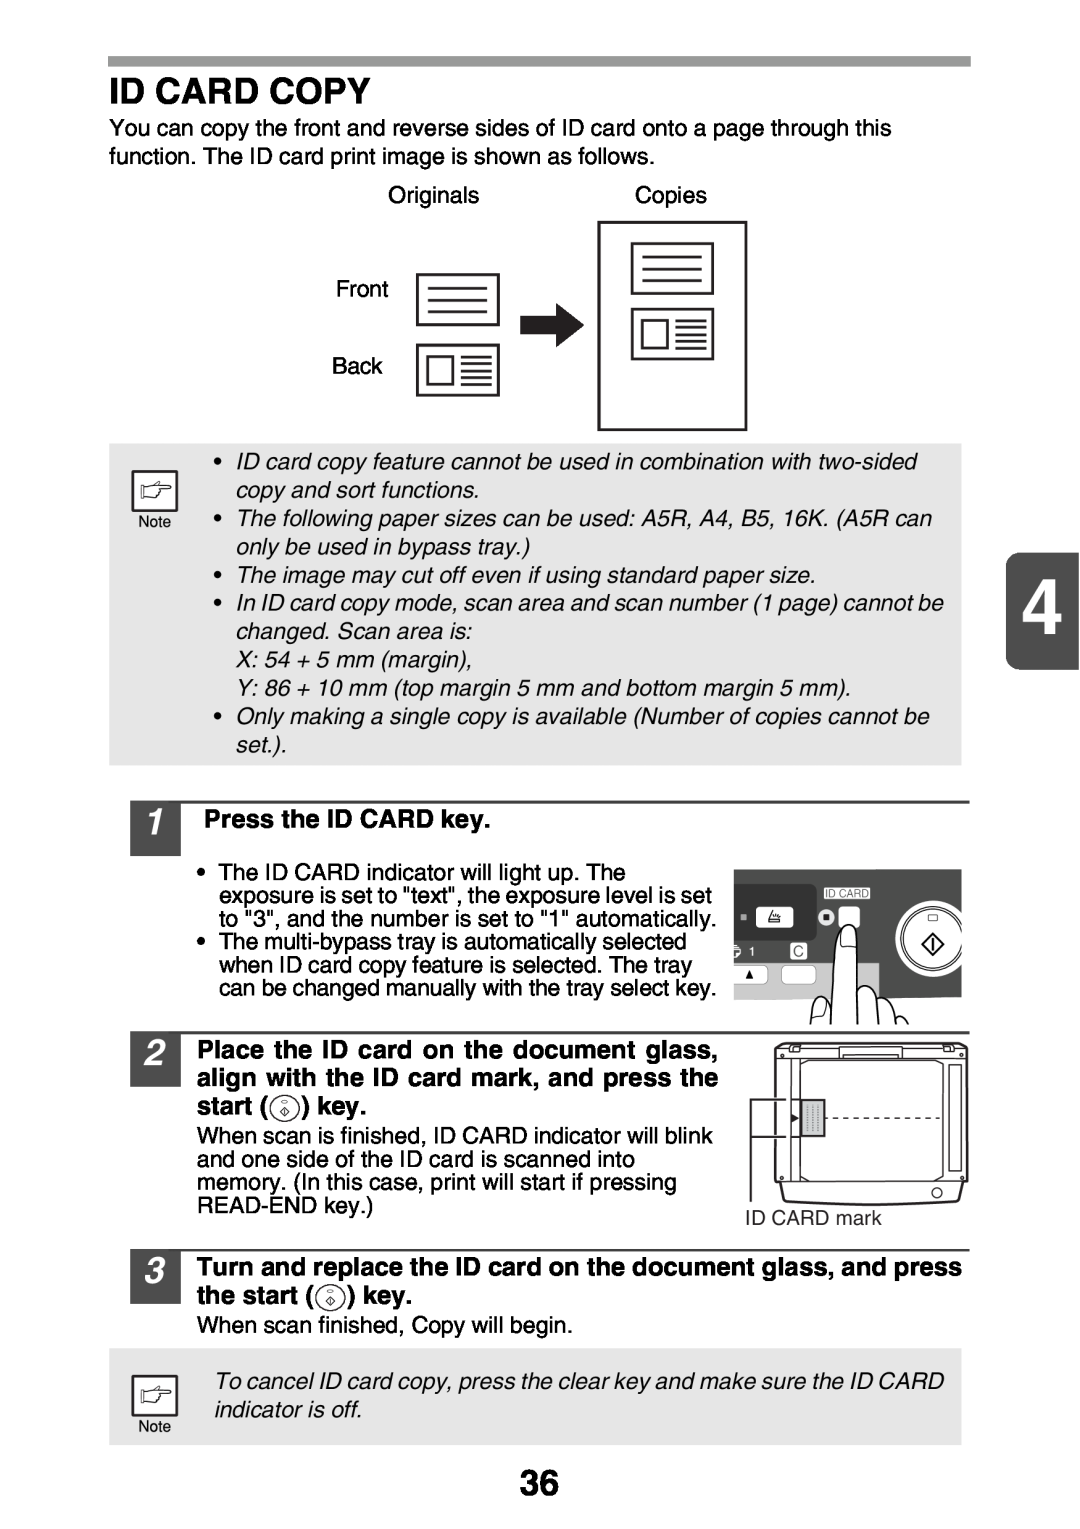 Sharp AL2041, AL2021 manual Id Card Copy, Press the ID CARD key, Place the ID card on the document glass, the start key 